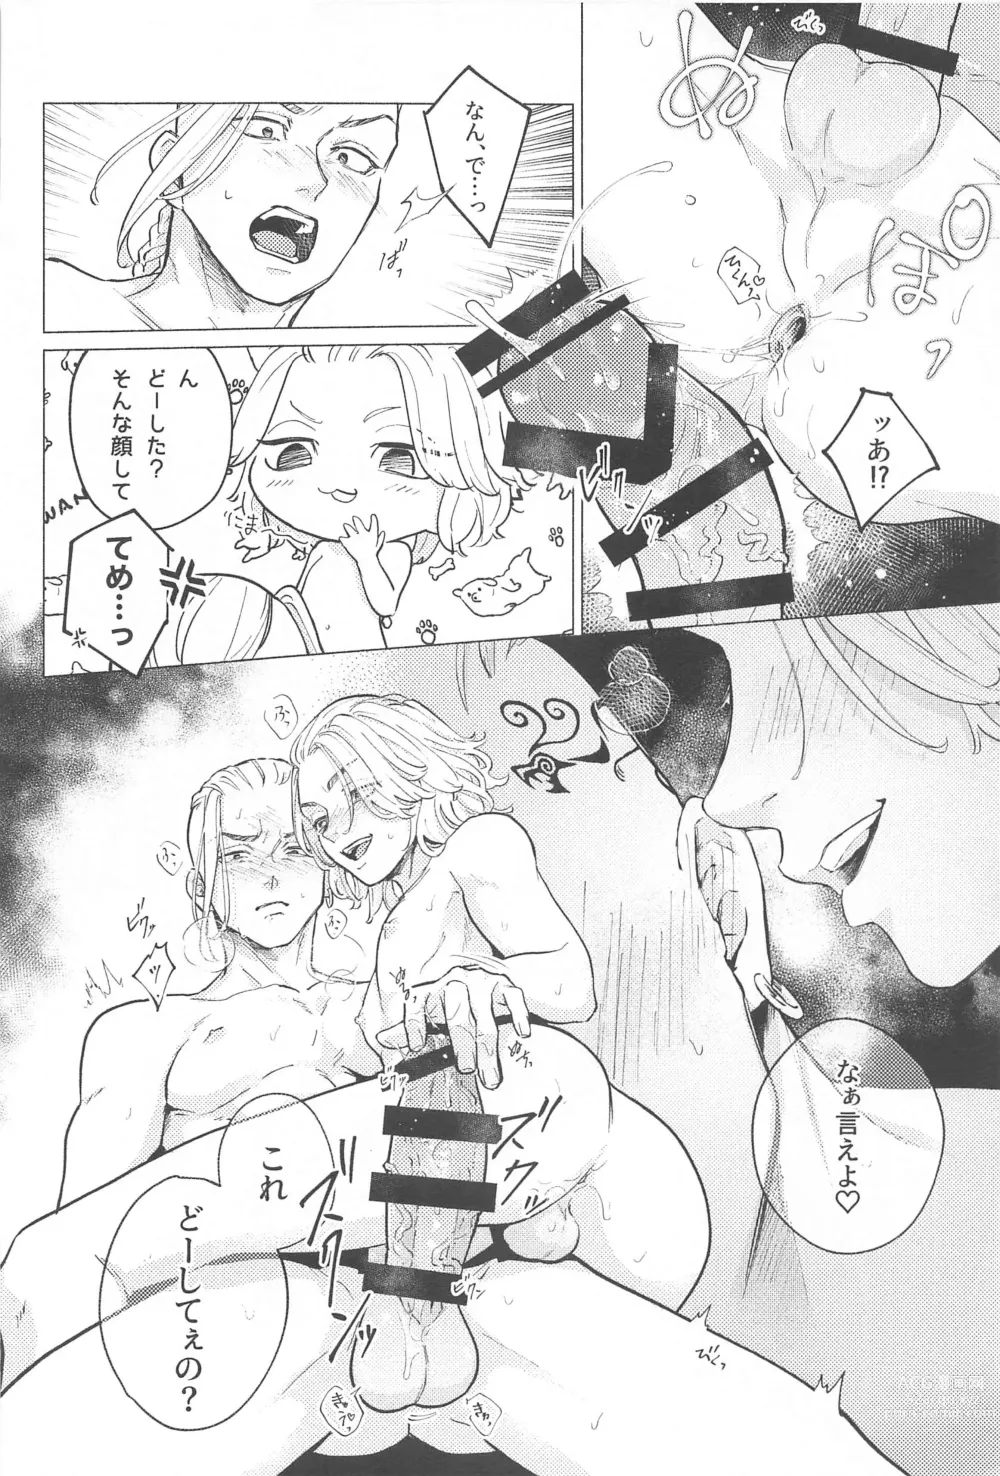 Page 15 of doujinshi Endure.